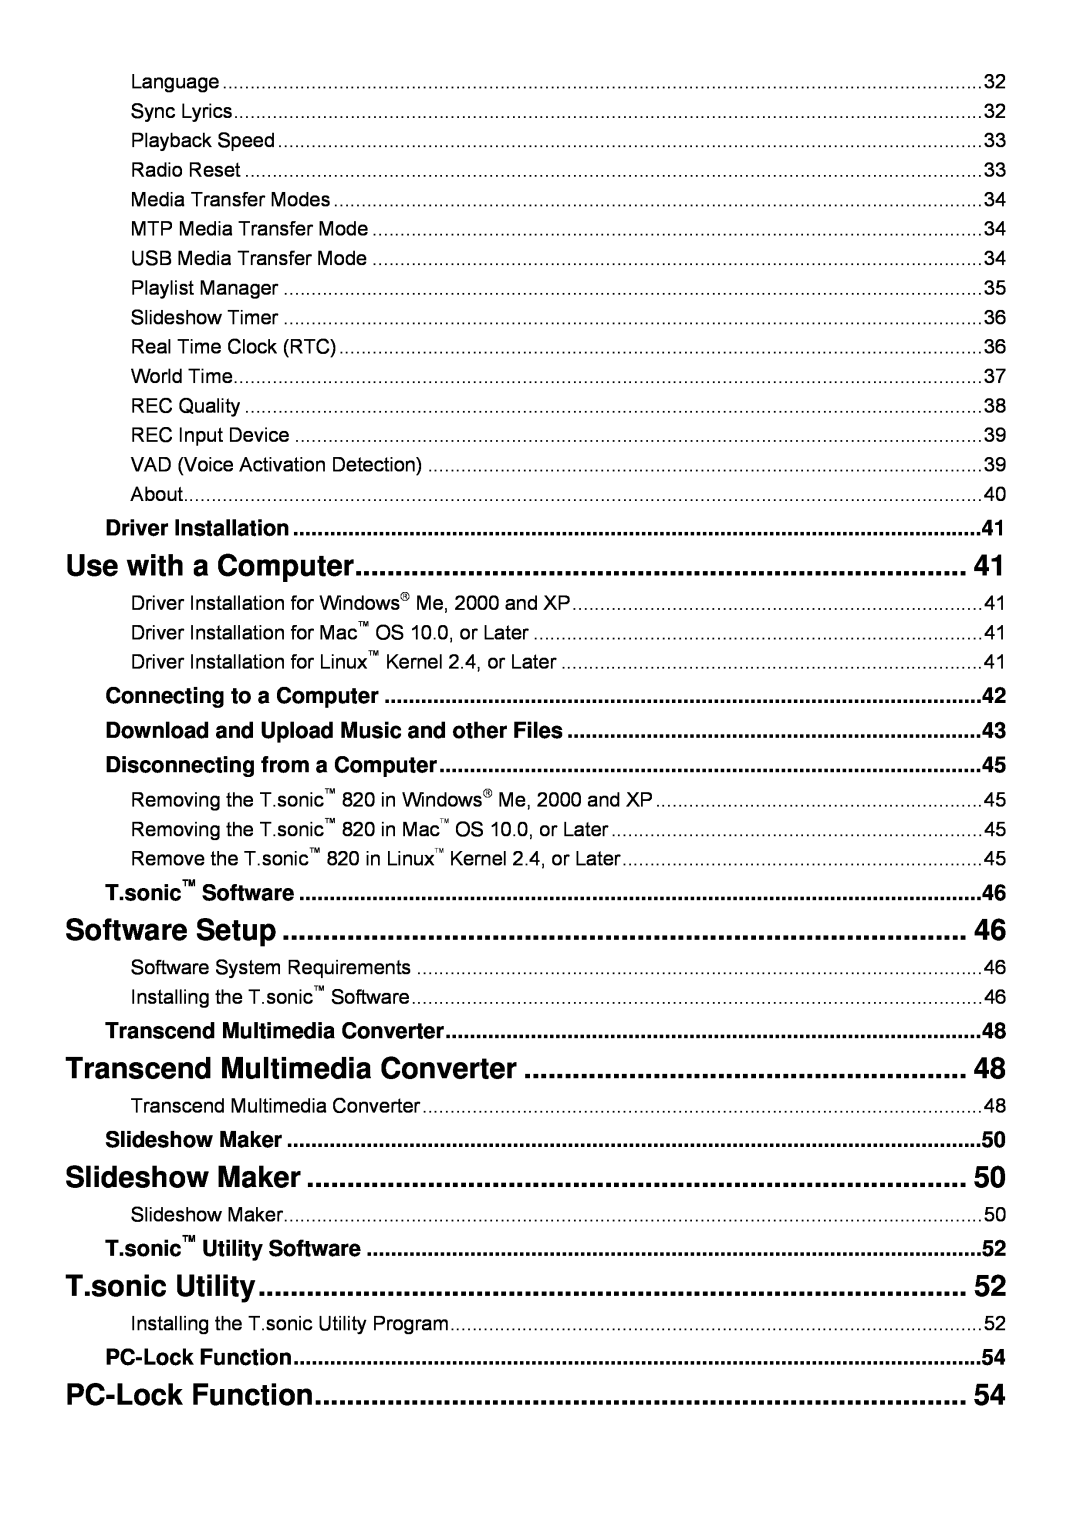 Transcend Information 820 user manual Use with a Computer, Transcend Multimedia Converter, Slideshow Maker, T.sonic Utility 